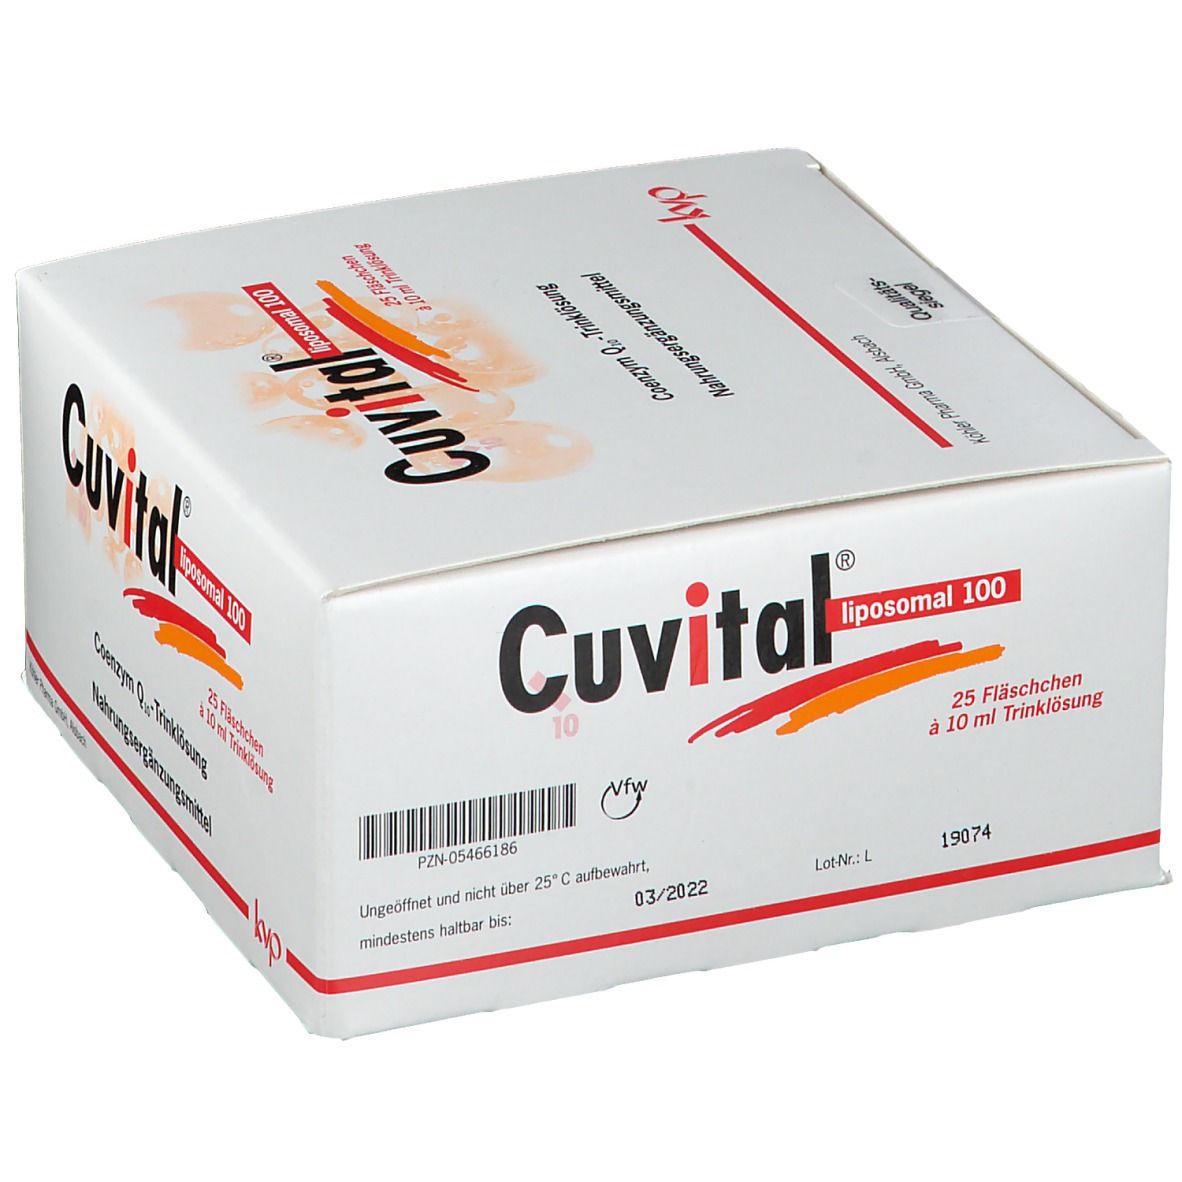 Cuvital® liposomal 100 Trinklösung